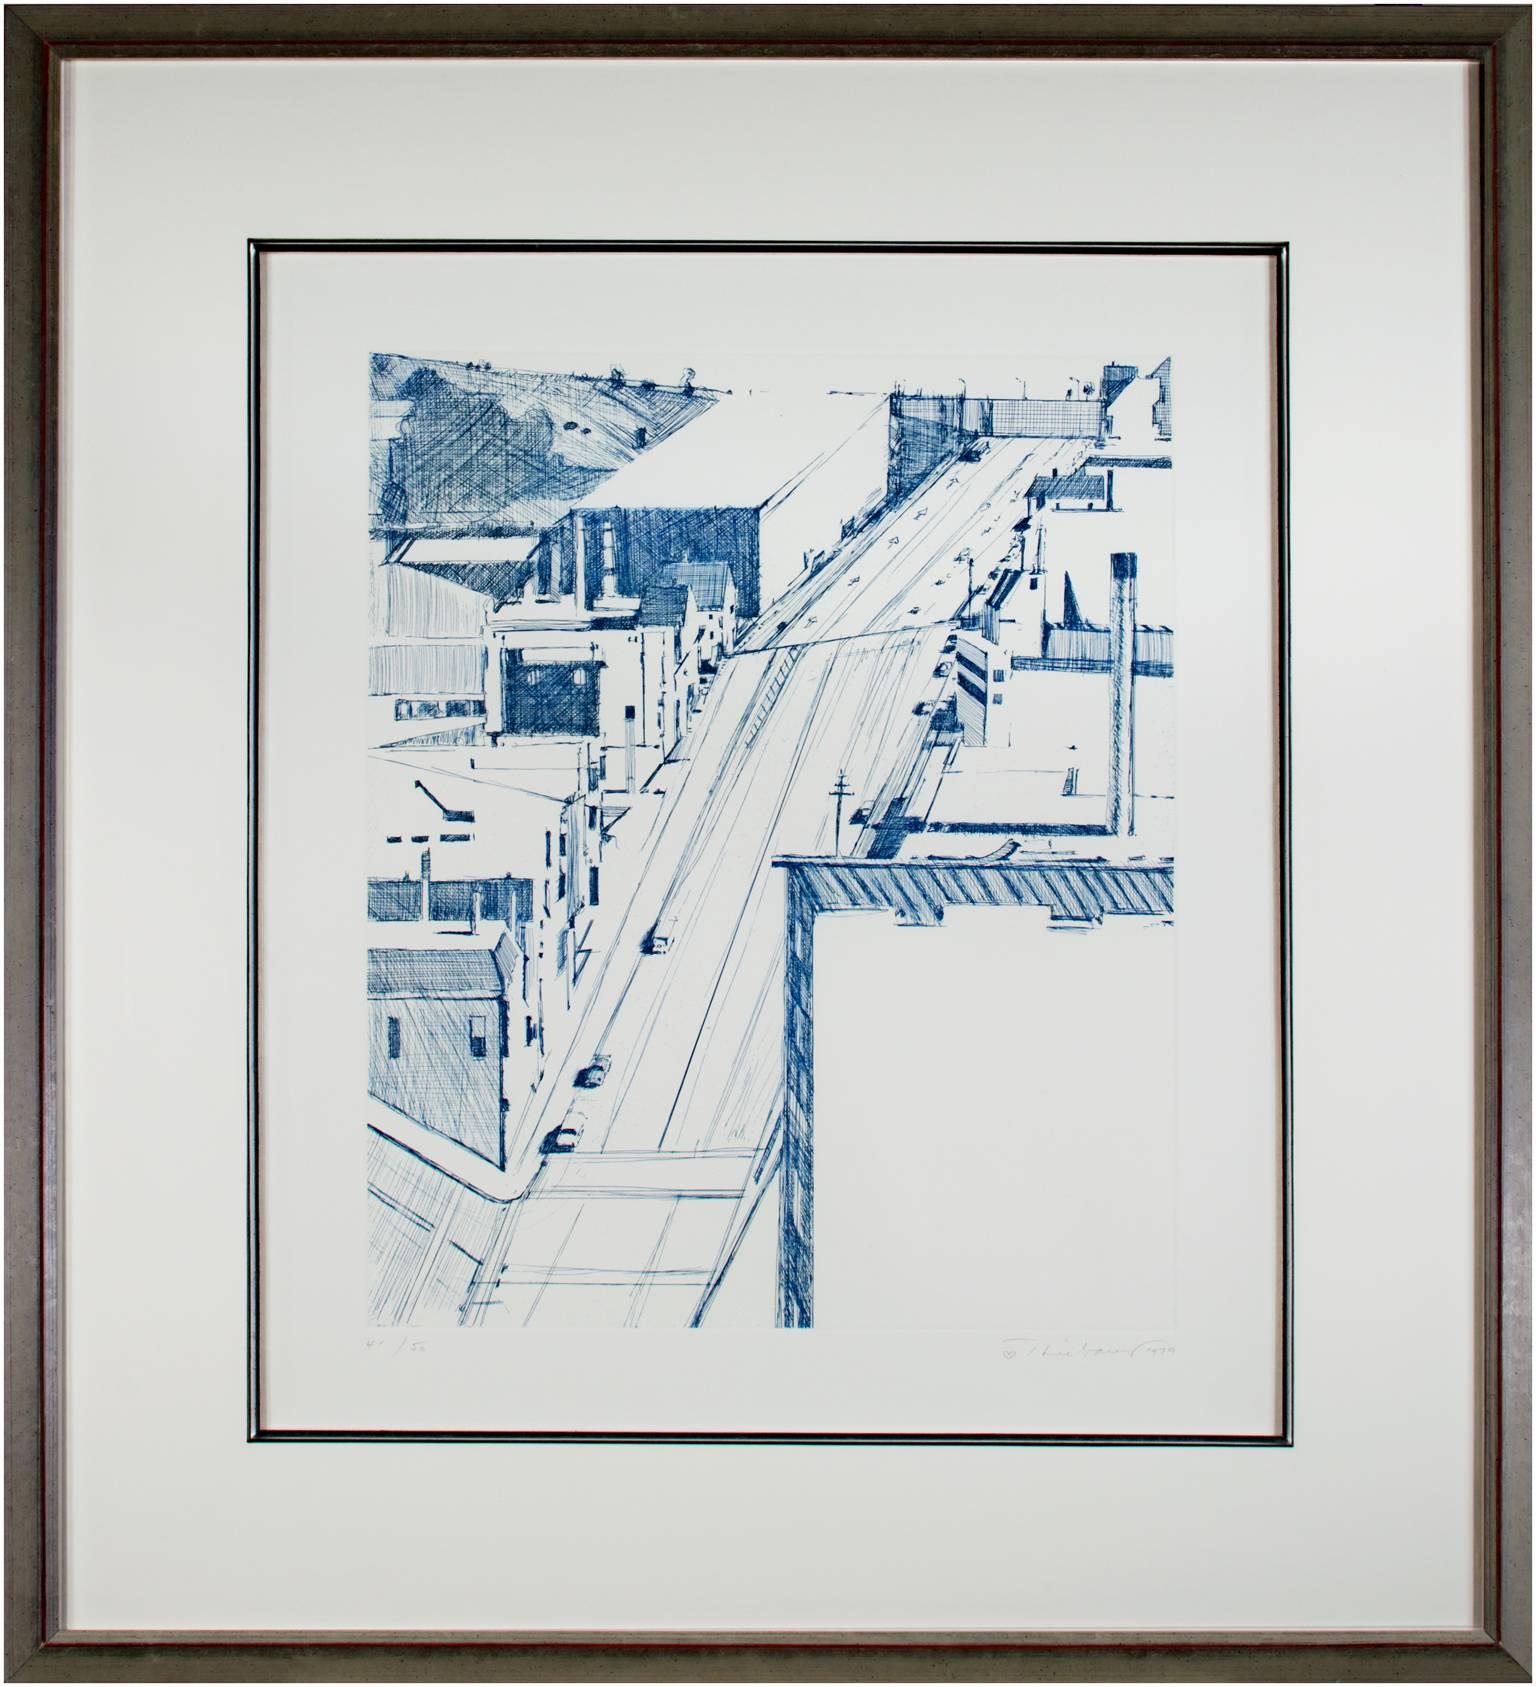 Down 18th Street - Print by Wayne Thiebaud